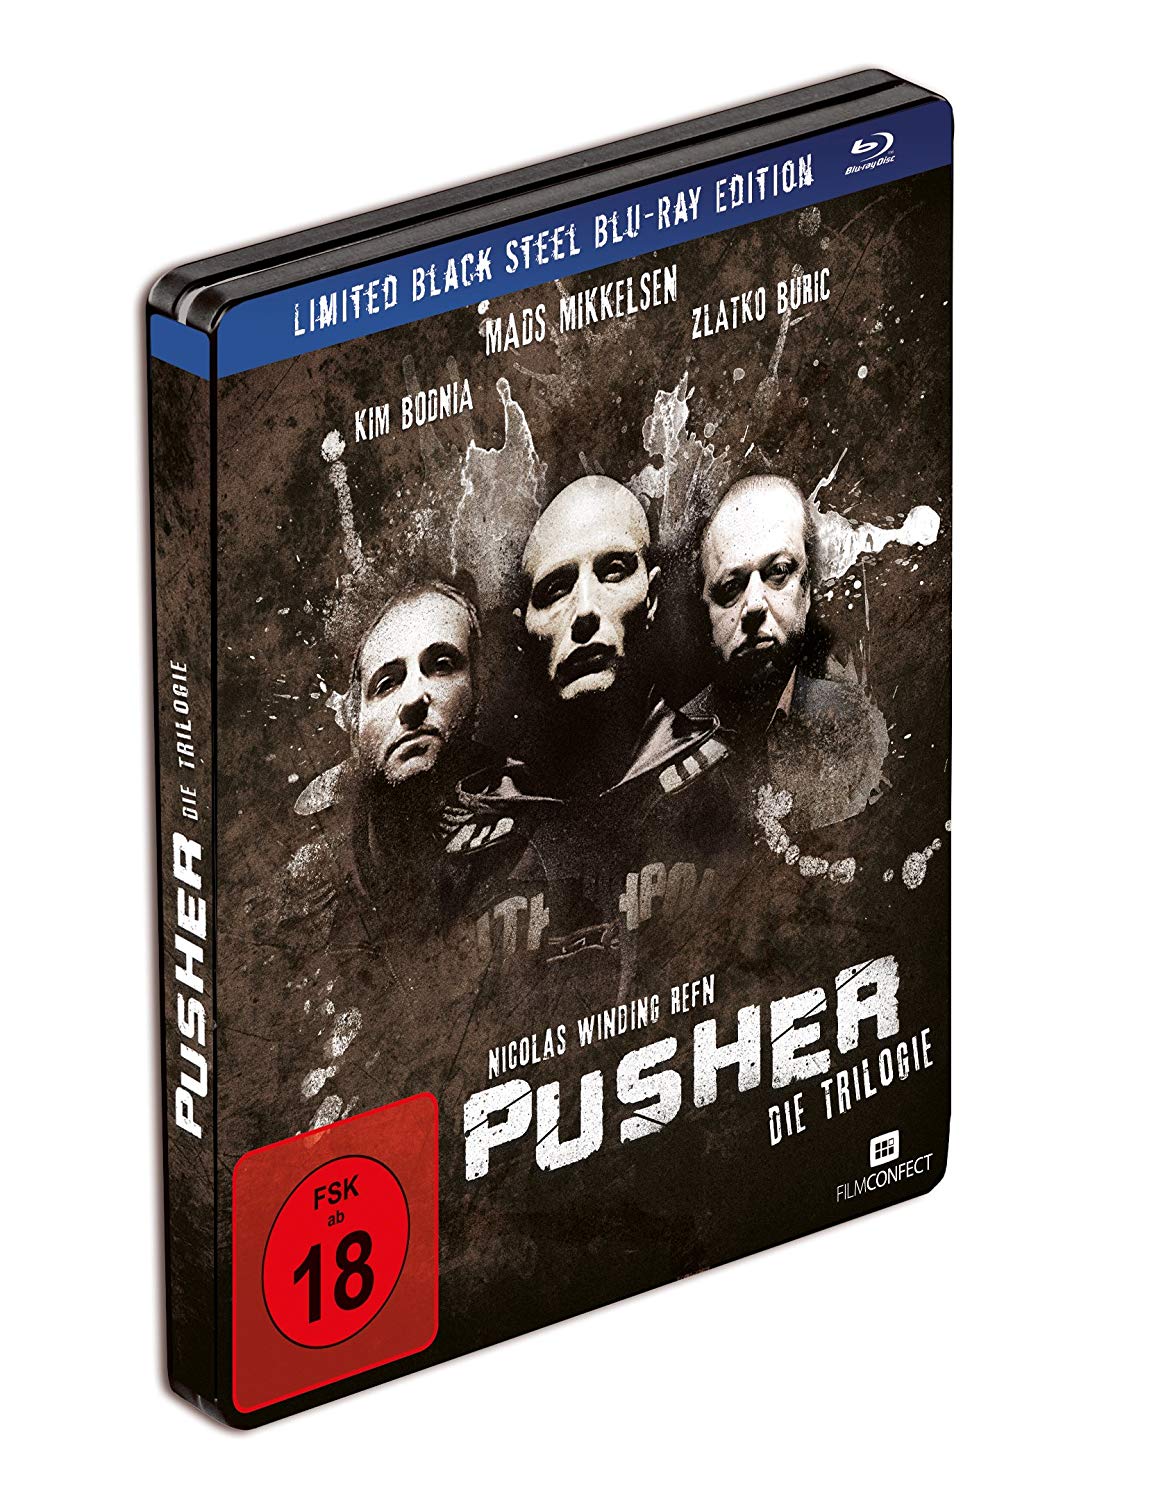 Pusher 3